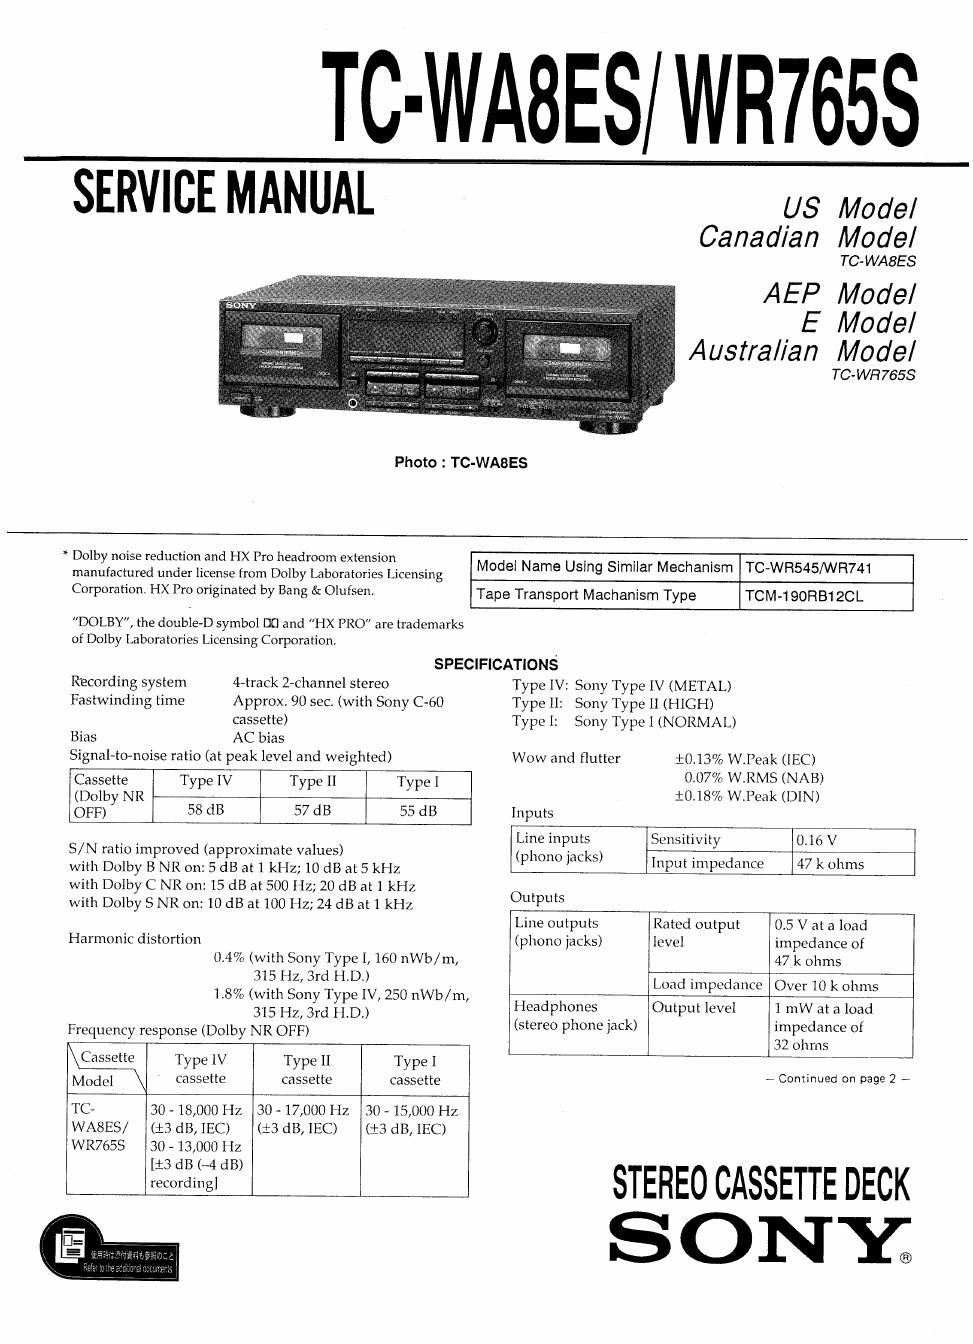 sony tc wa 8es service manual